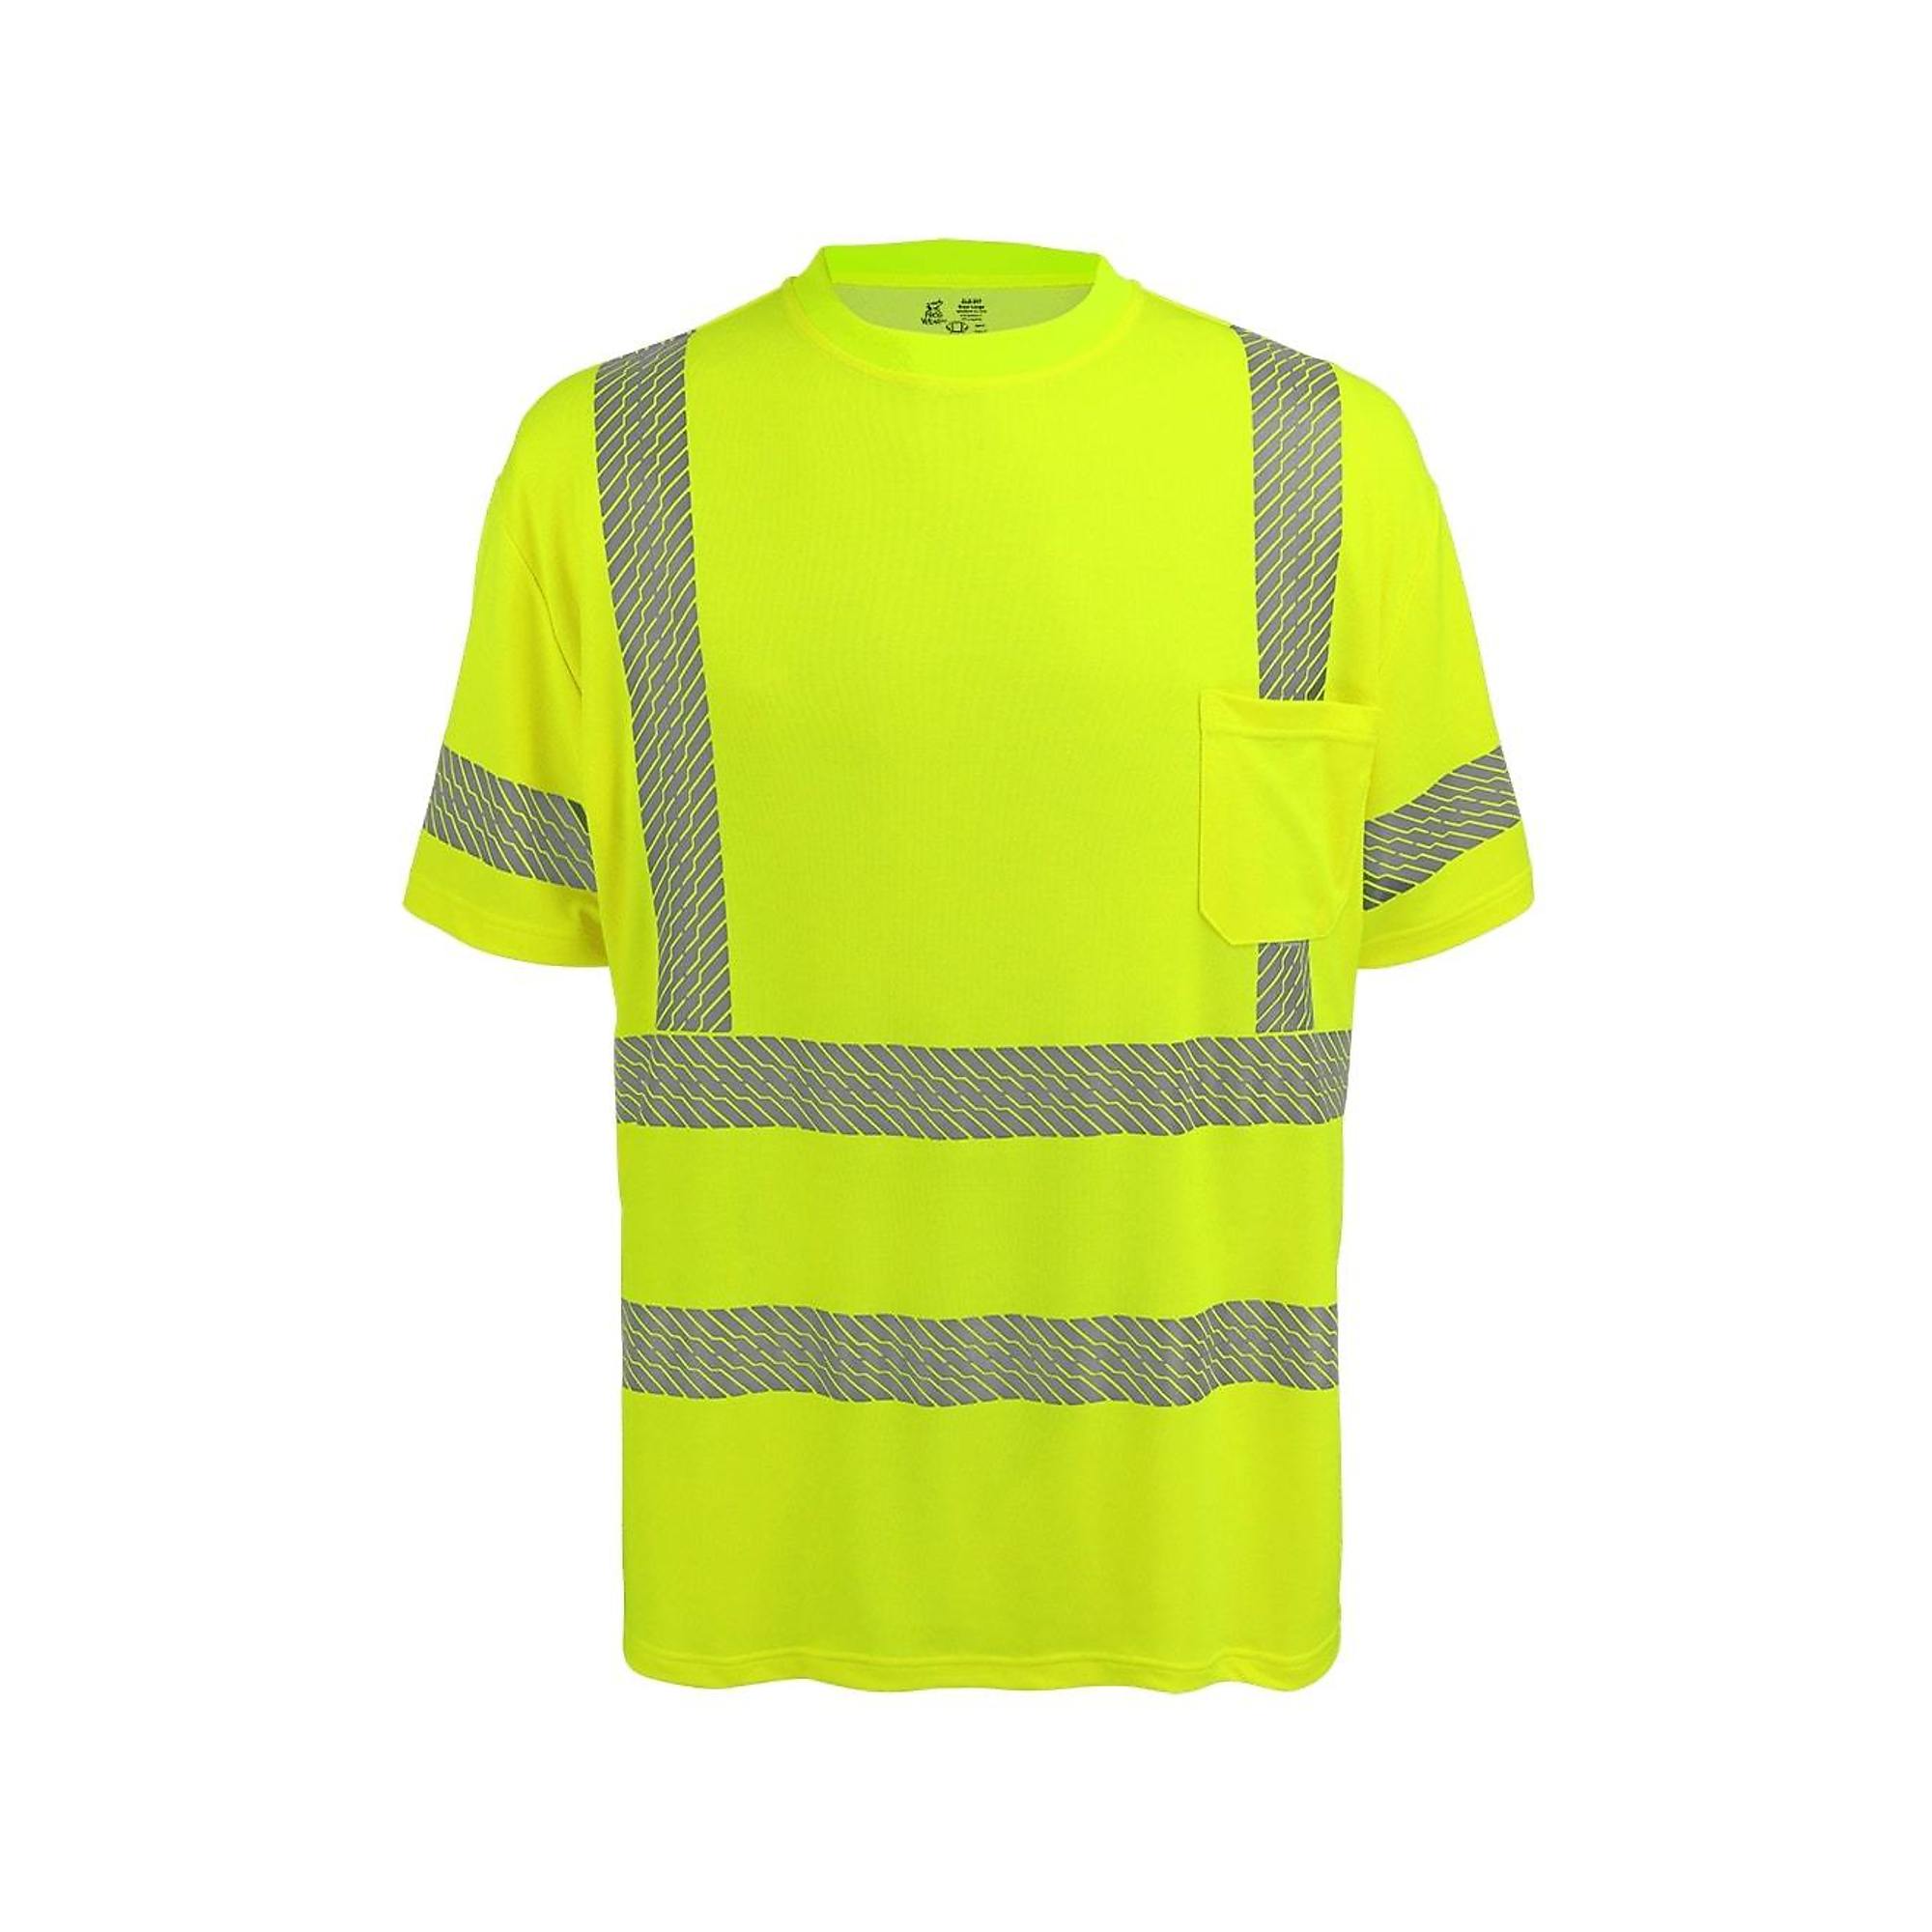 FrogWear, HV Yellow/Green,Class 3Bamboo Self-Wicking, Athletic Shirt, Size M, Model GLO-217-M